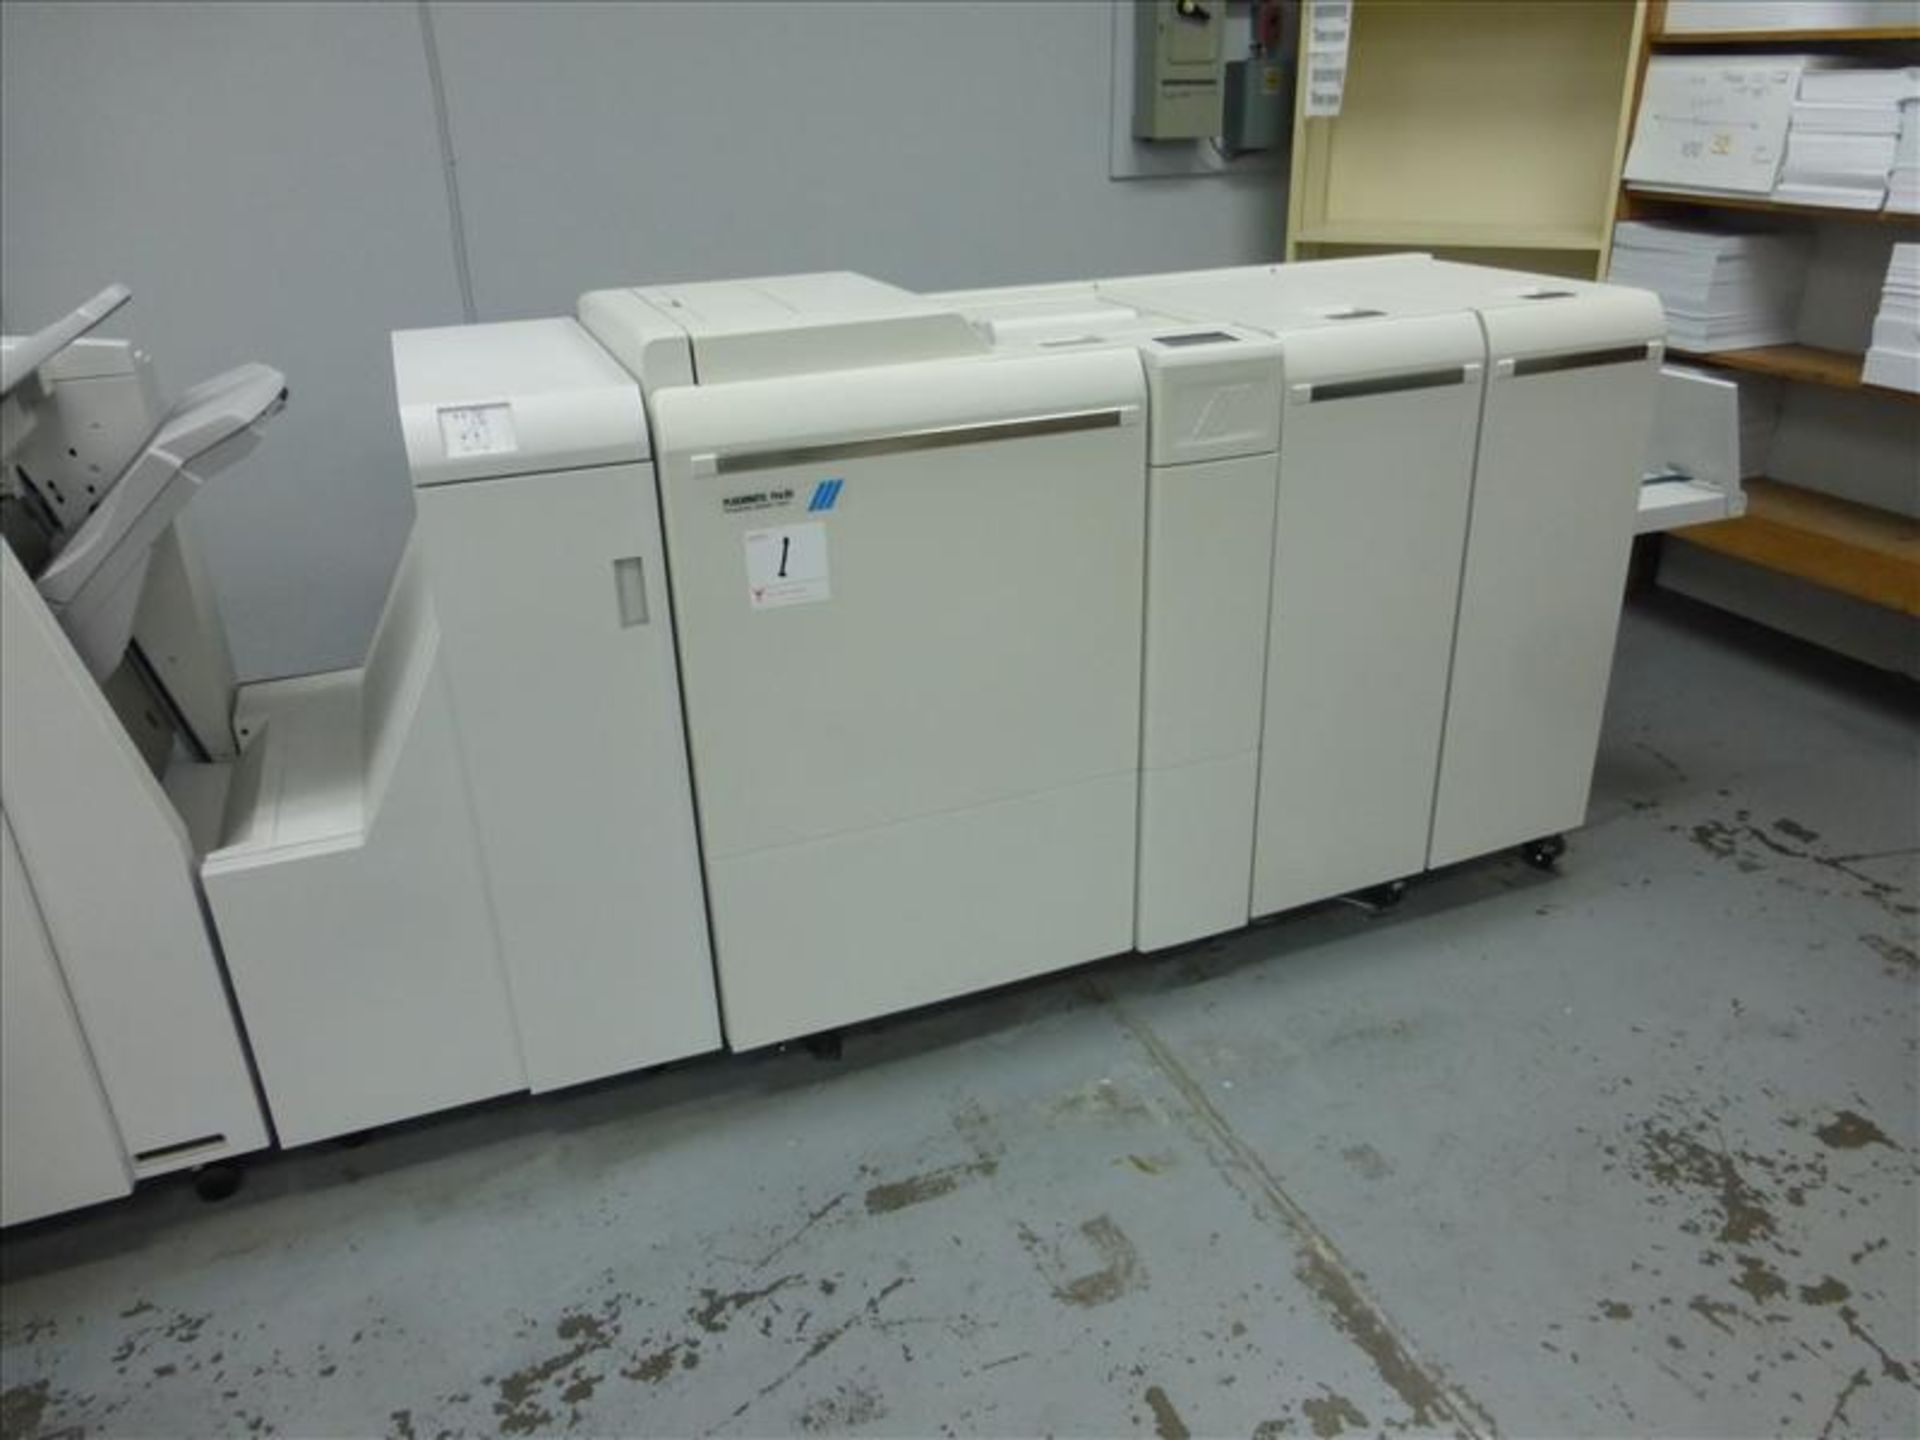 Fuji Xerox Digital Color Printing Press, model 1000 Colorpress w/Pro 35 Production Booklet Maker - Image 6 of 15